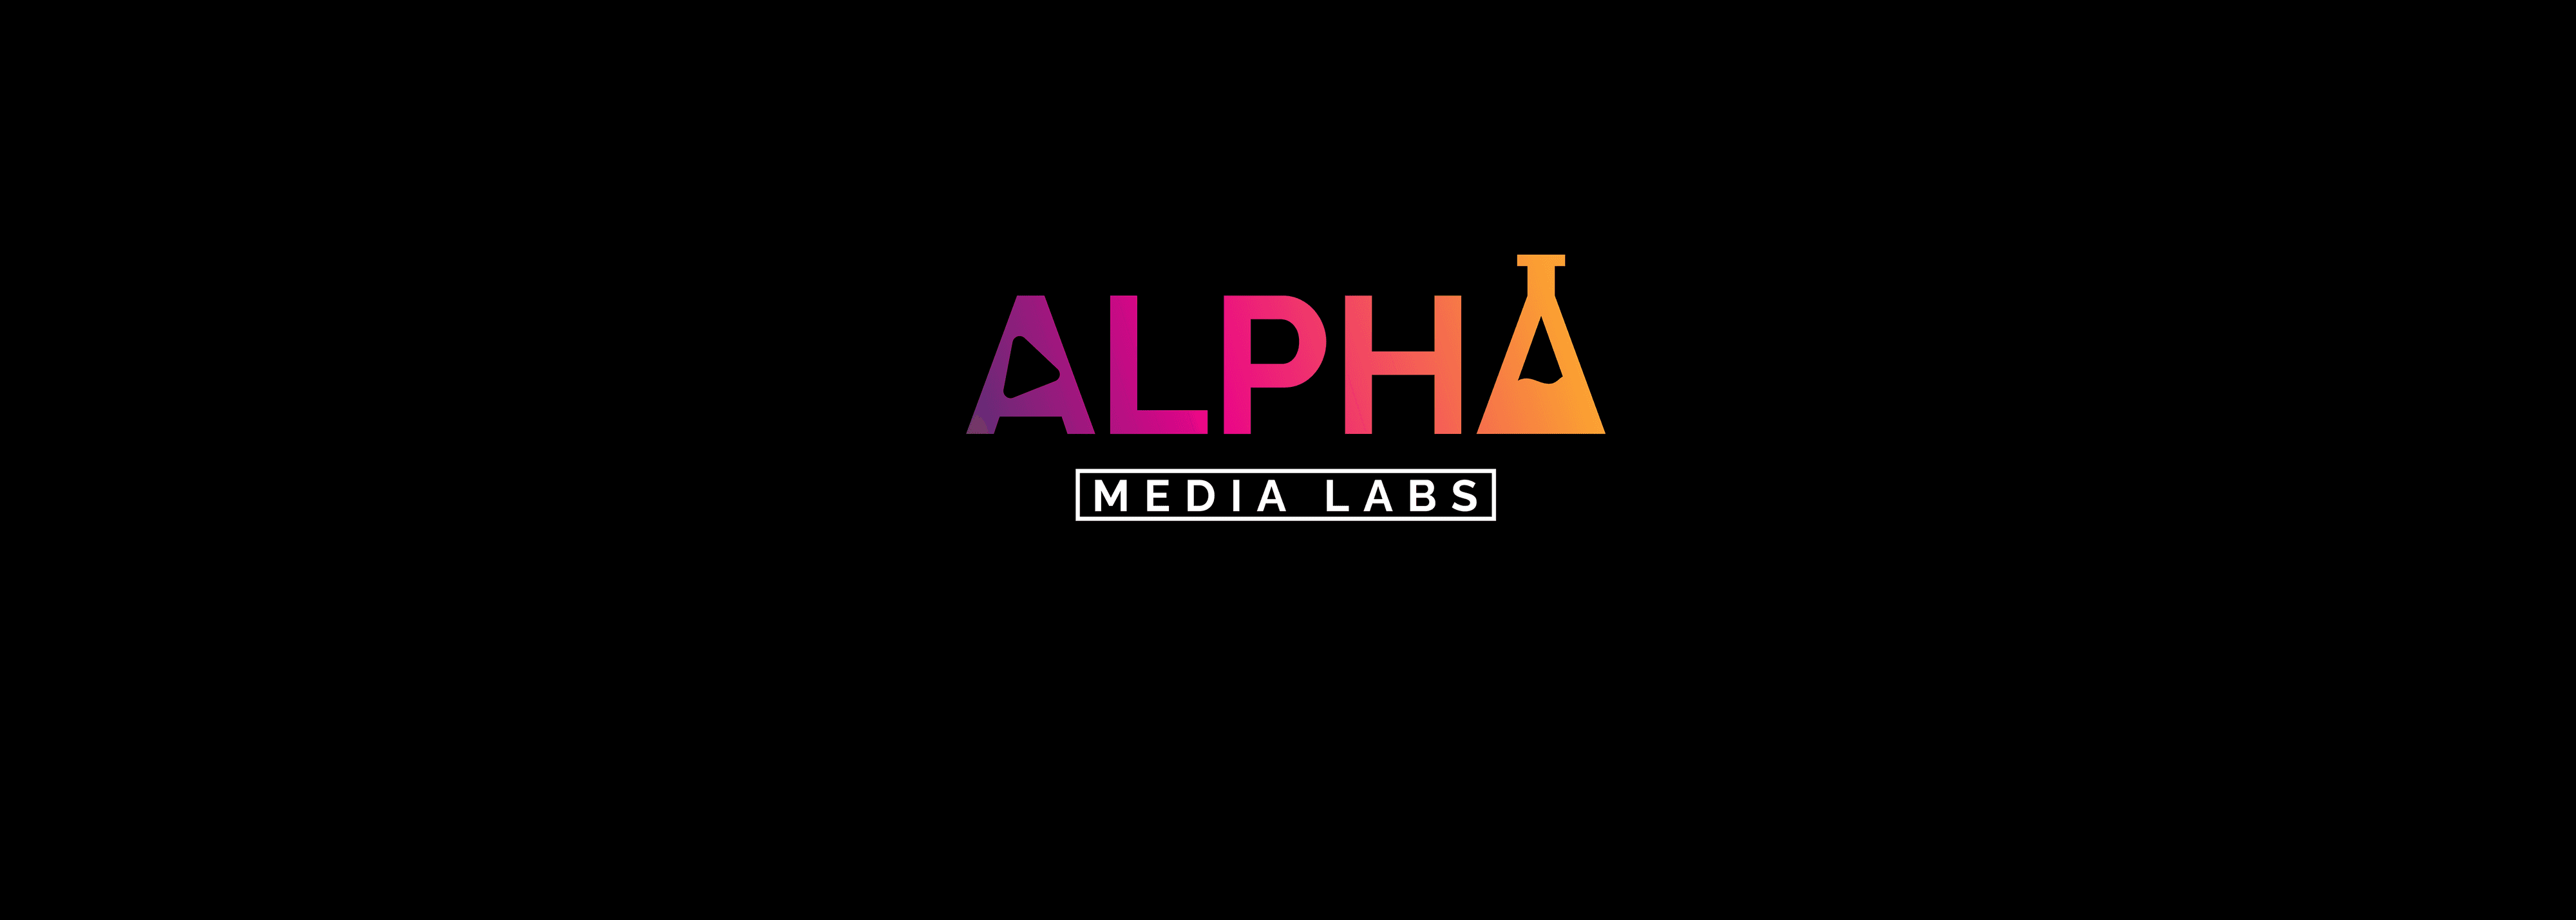 AlphaMediaLabs banner